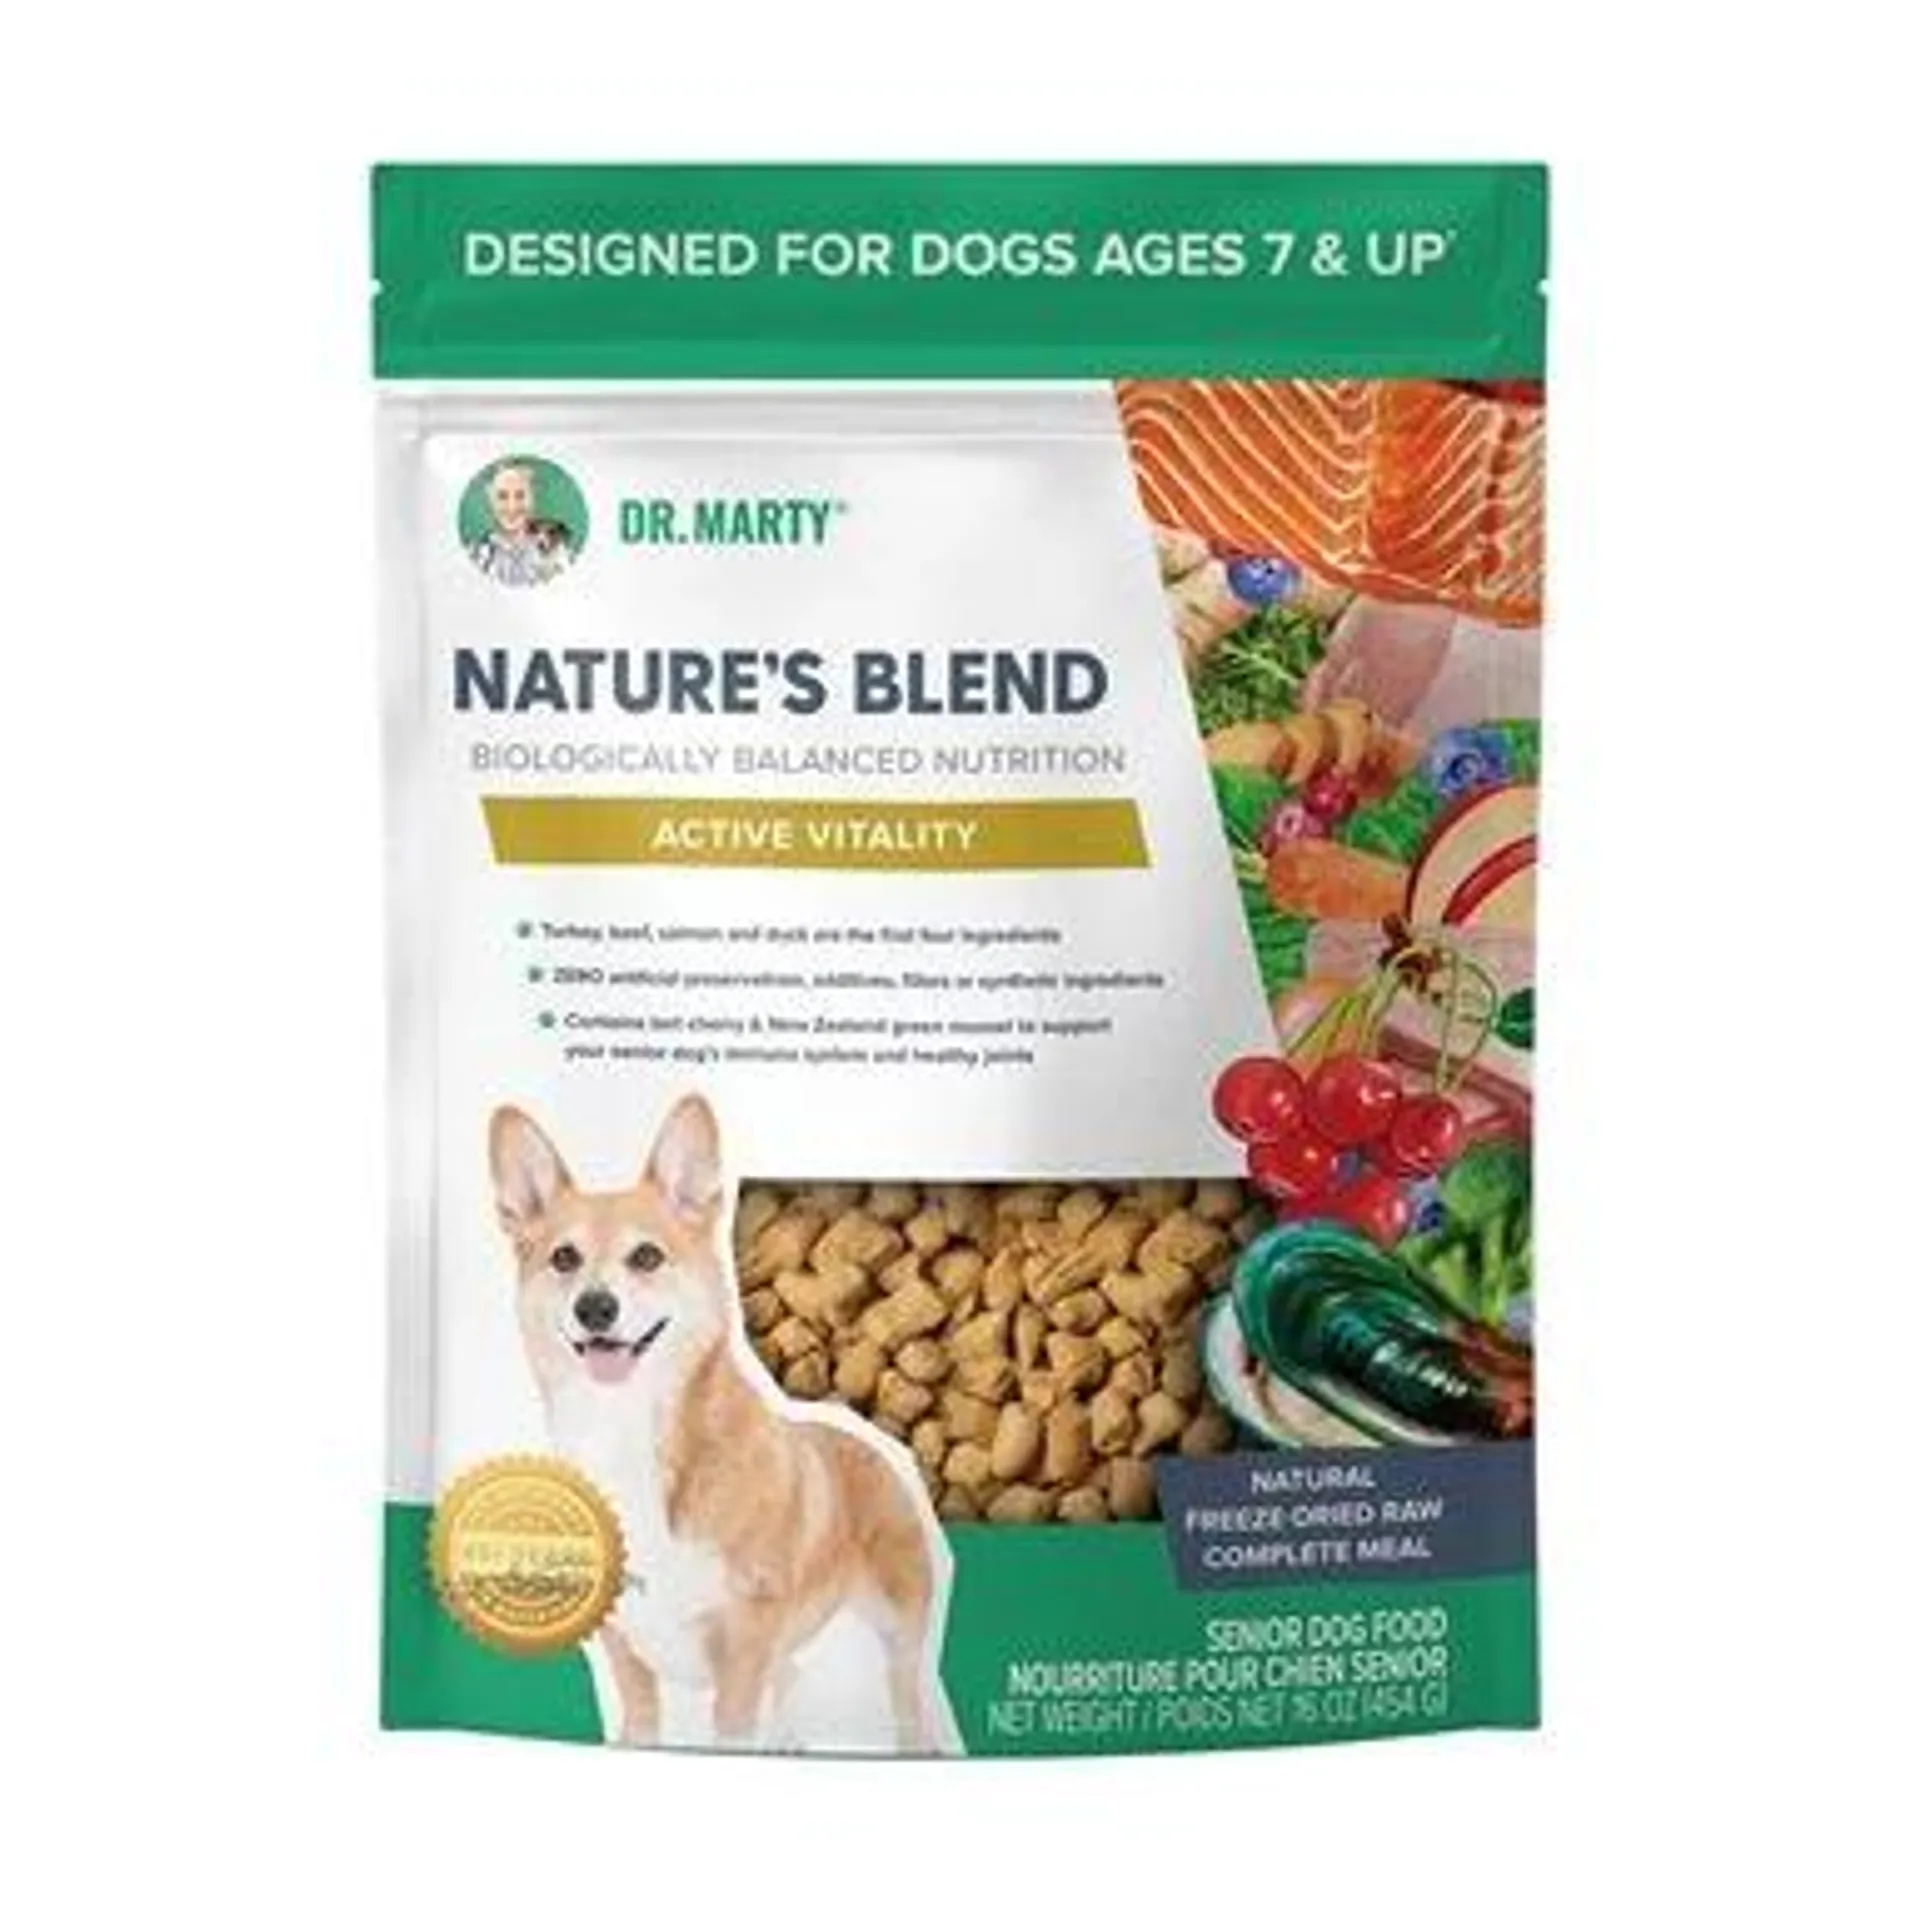 Dr. Marty Nature's Blend Premium Freeze-Dried Active Vitality Senior Dog Food, 16 Ounces